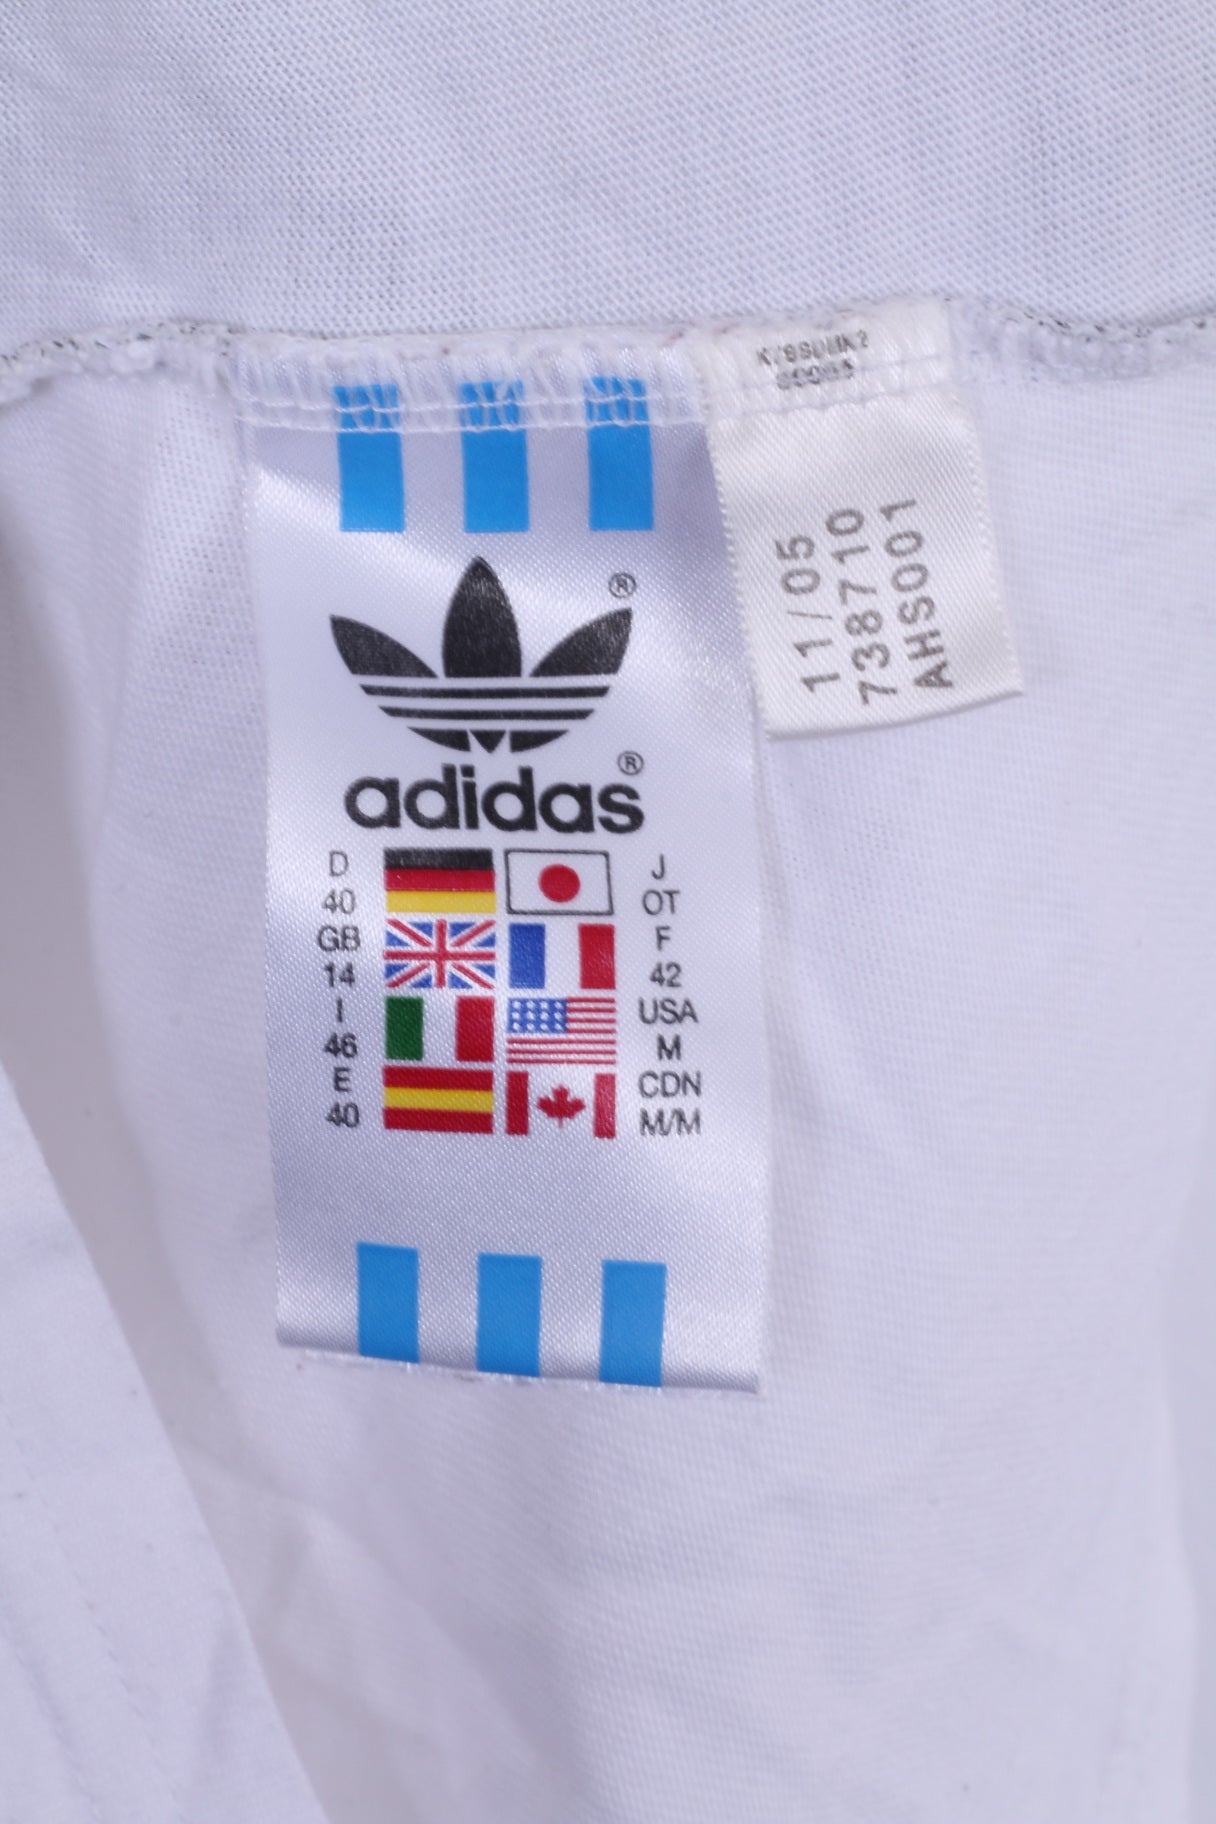 Adidas Womens 40 XS Shirt White Cotton Crew Neck Graphic Football